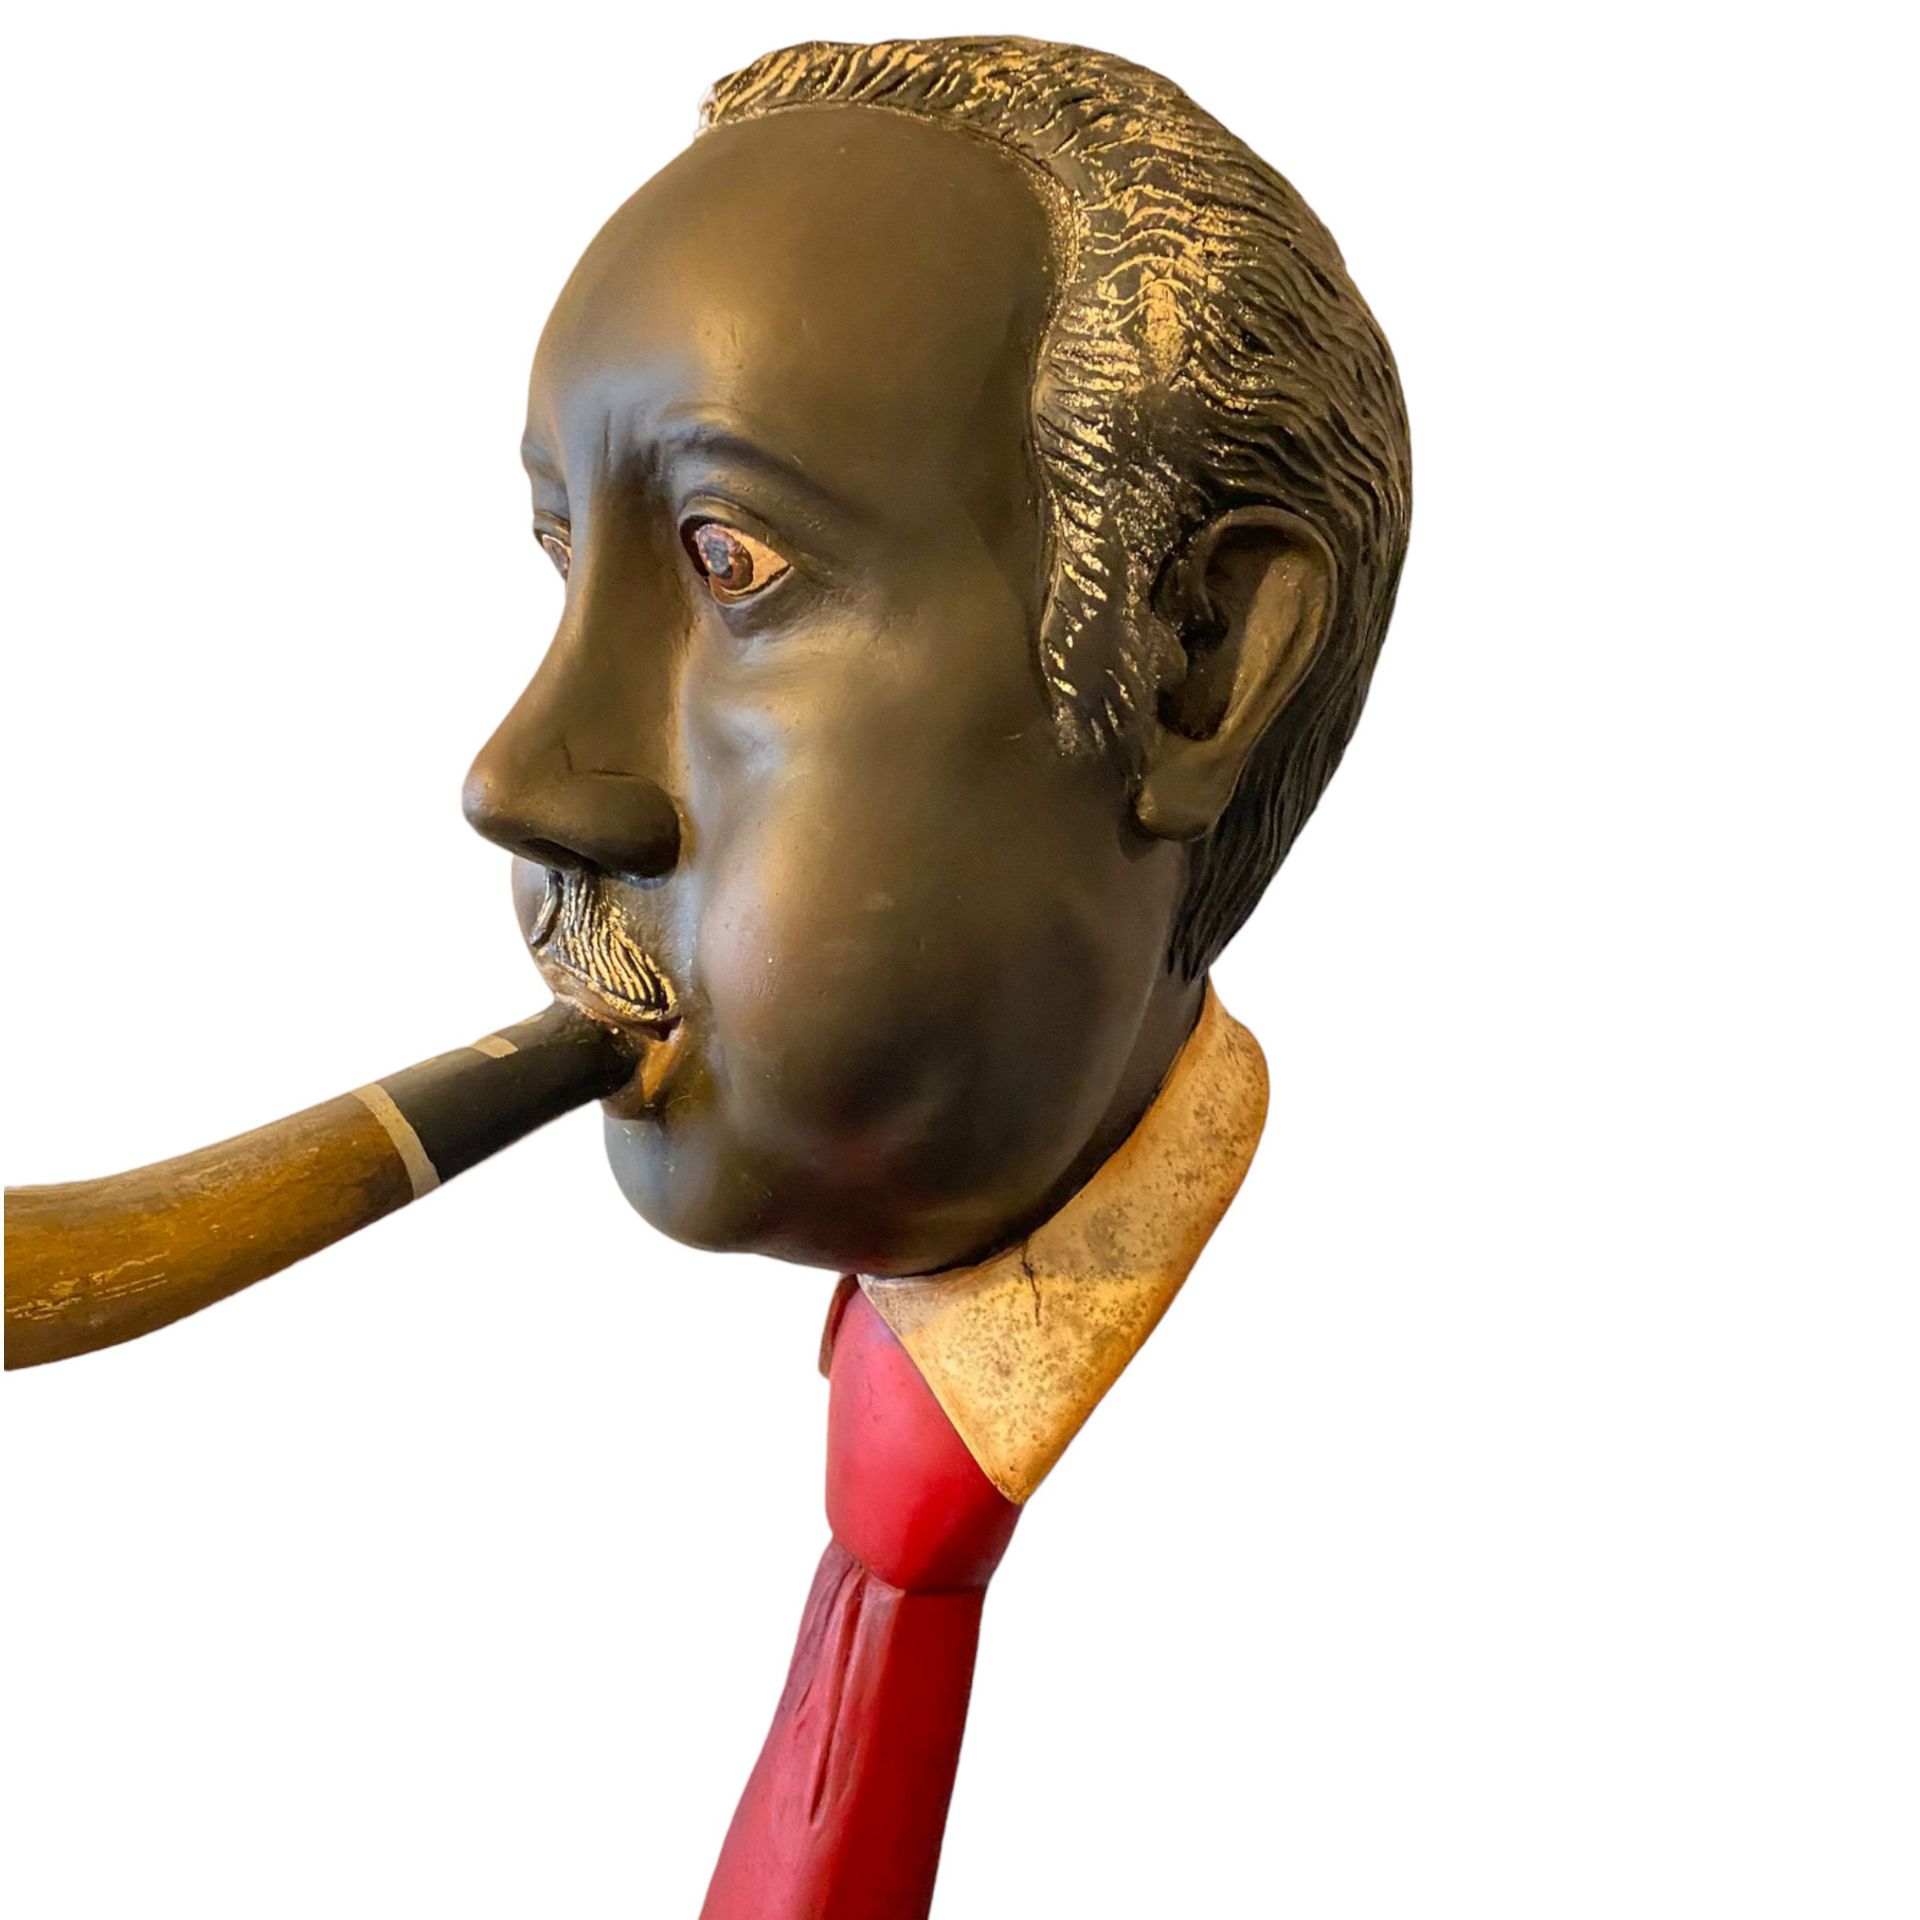 Lifesize Saxophone player statue - Image 2 of 5